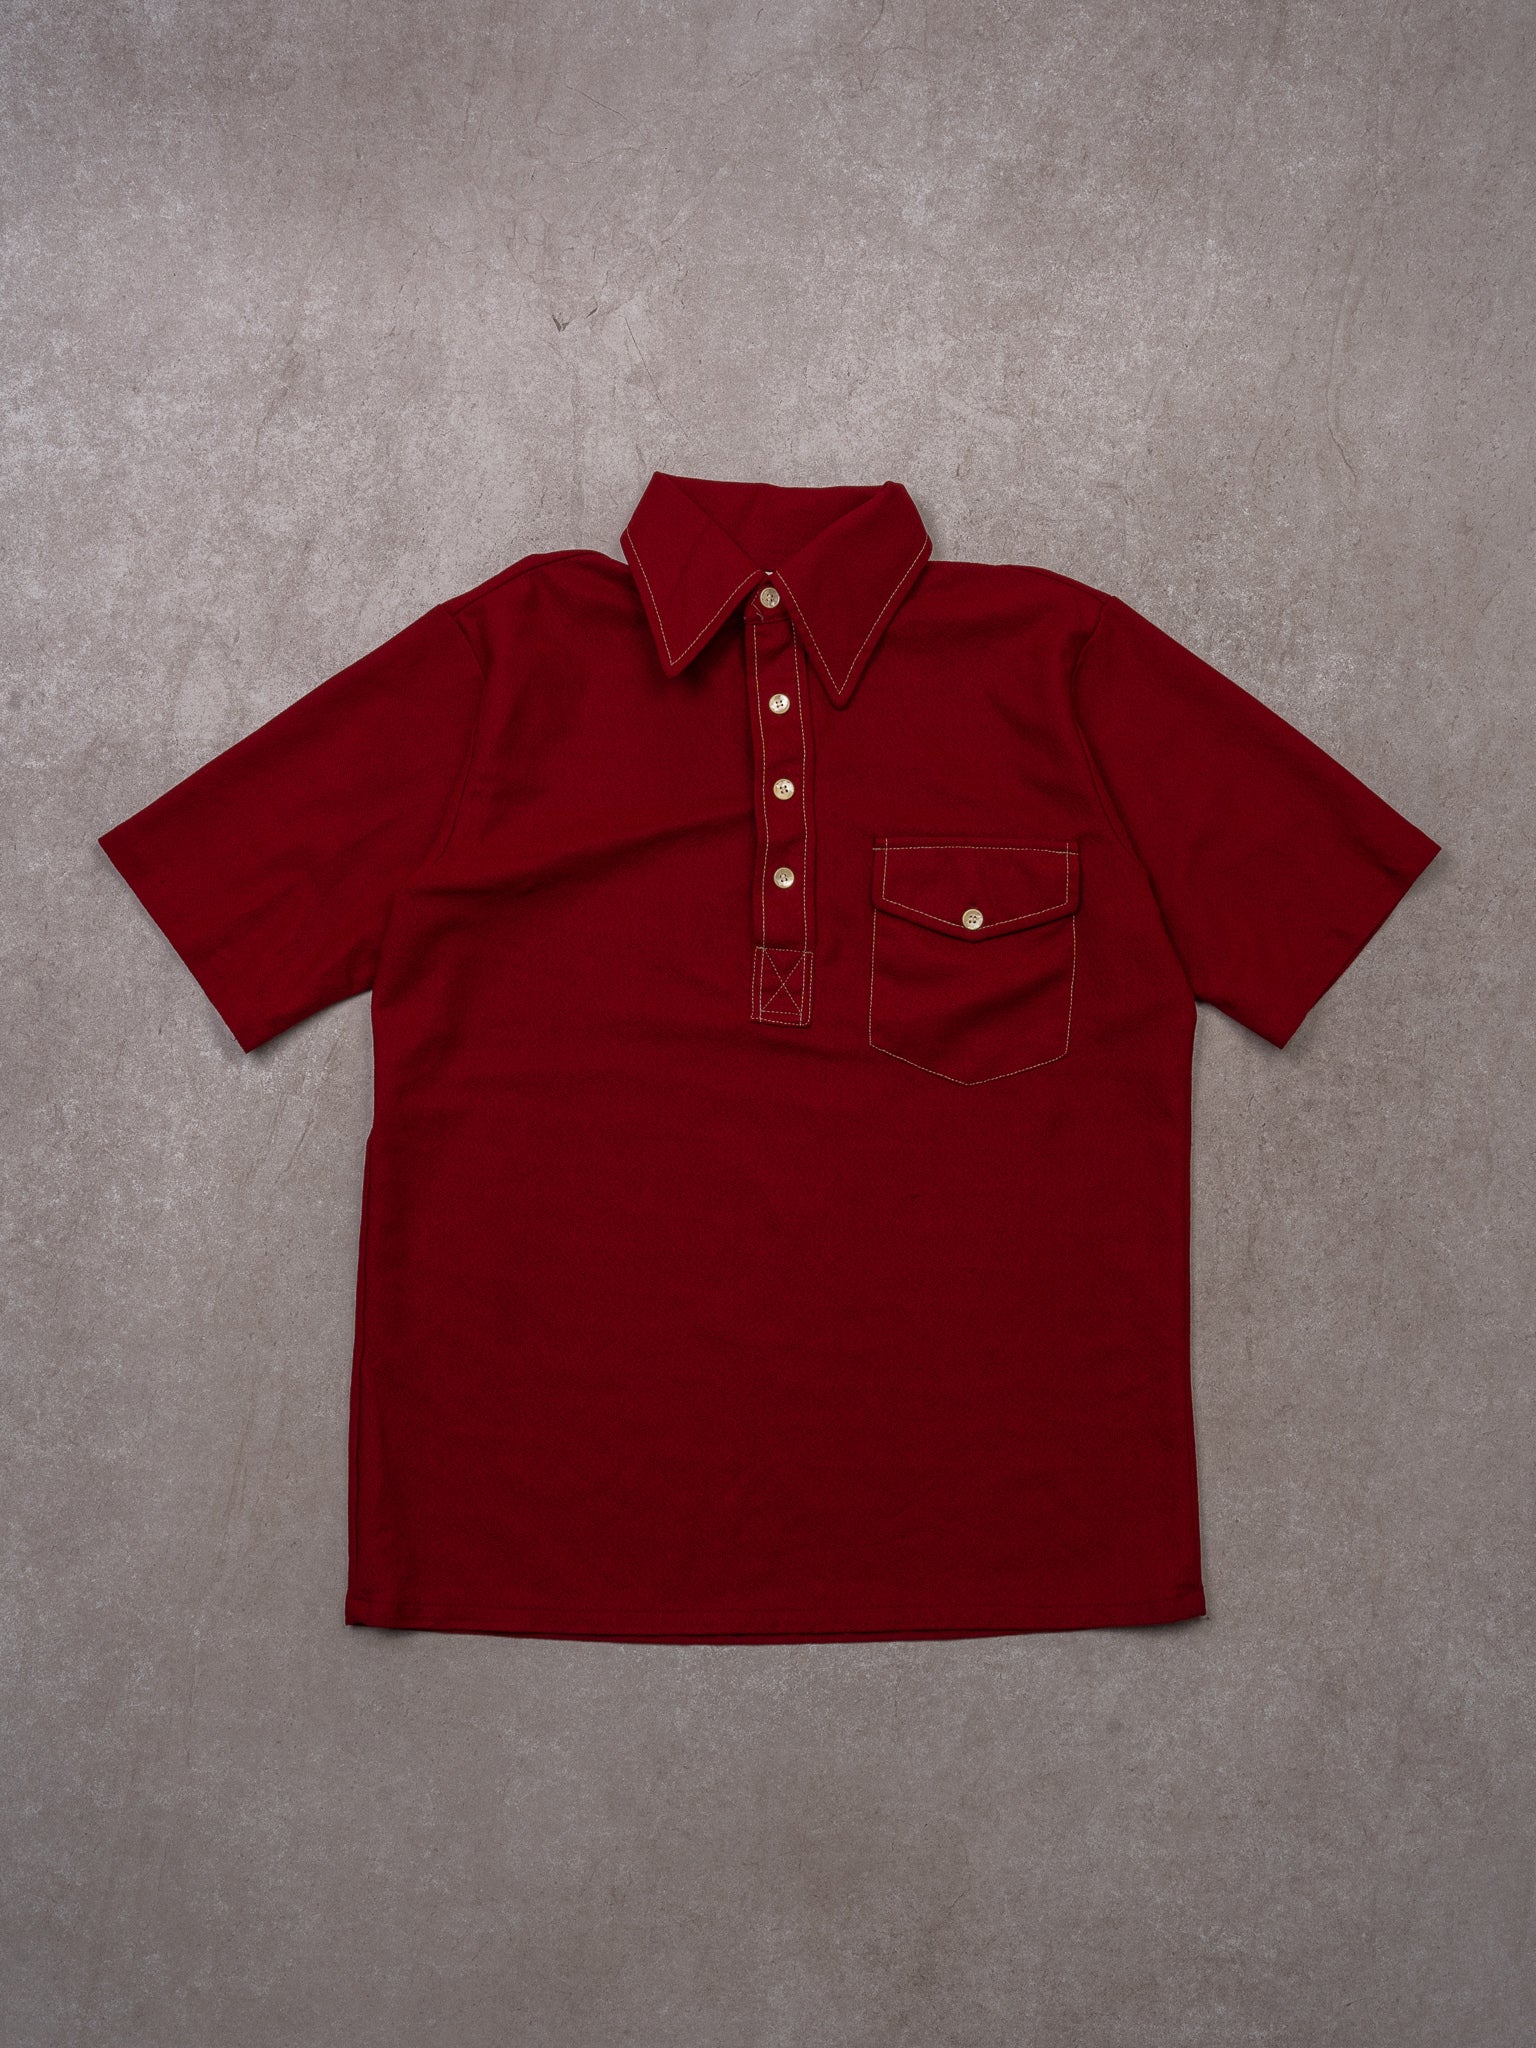 Vintage 70s Maroon + Beige Stitching Polo Dress Shirt (S)